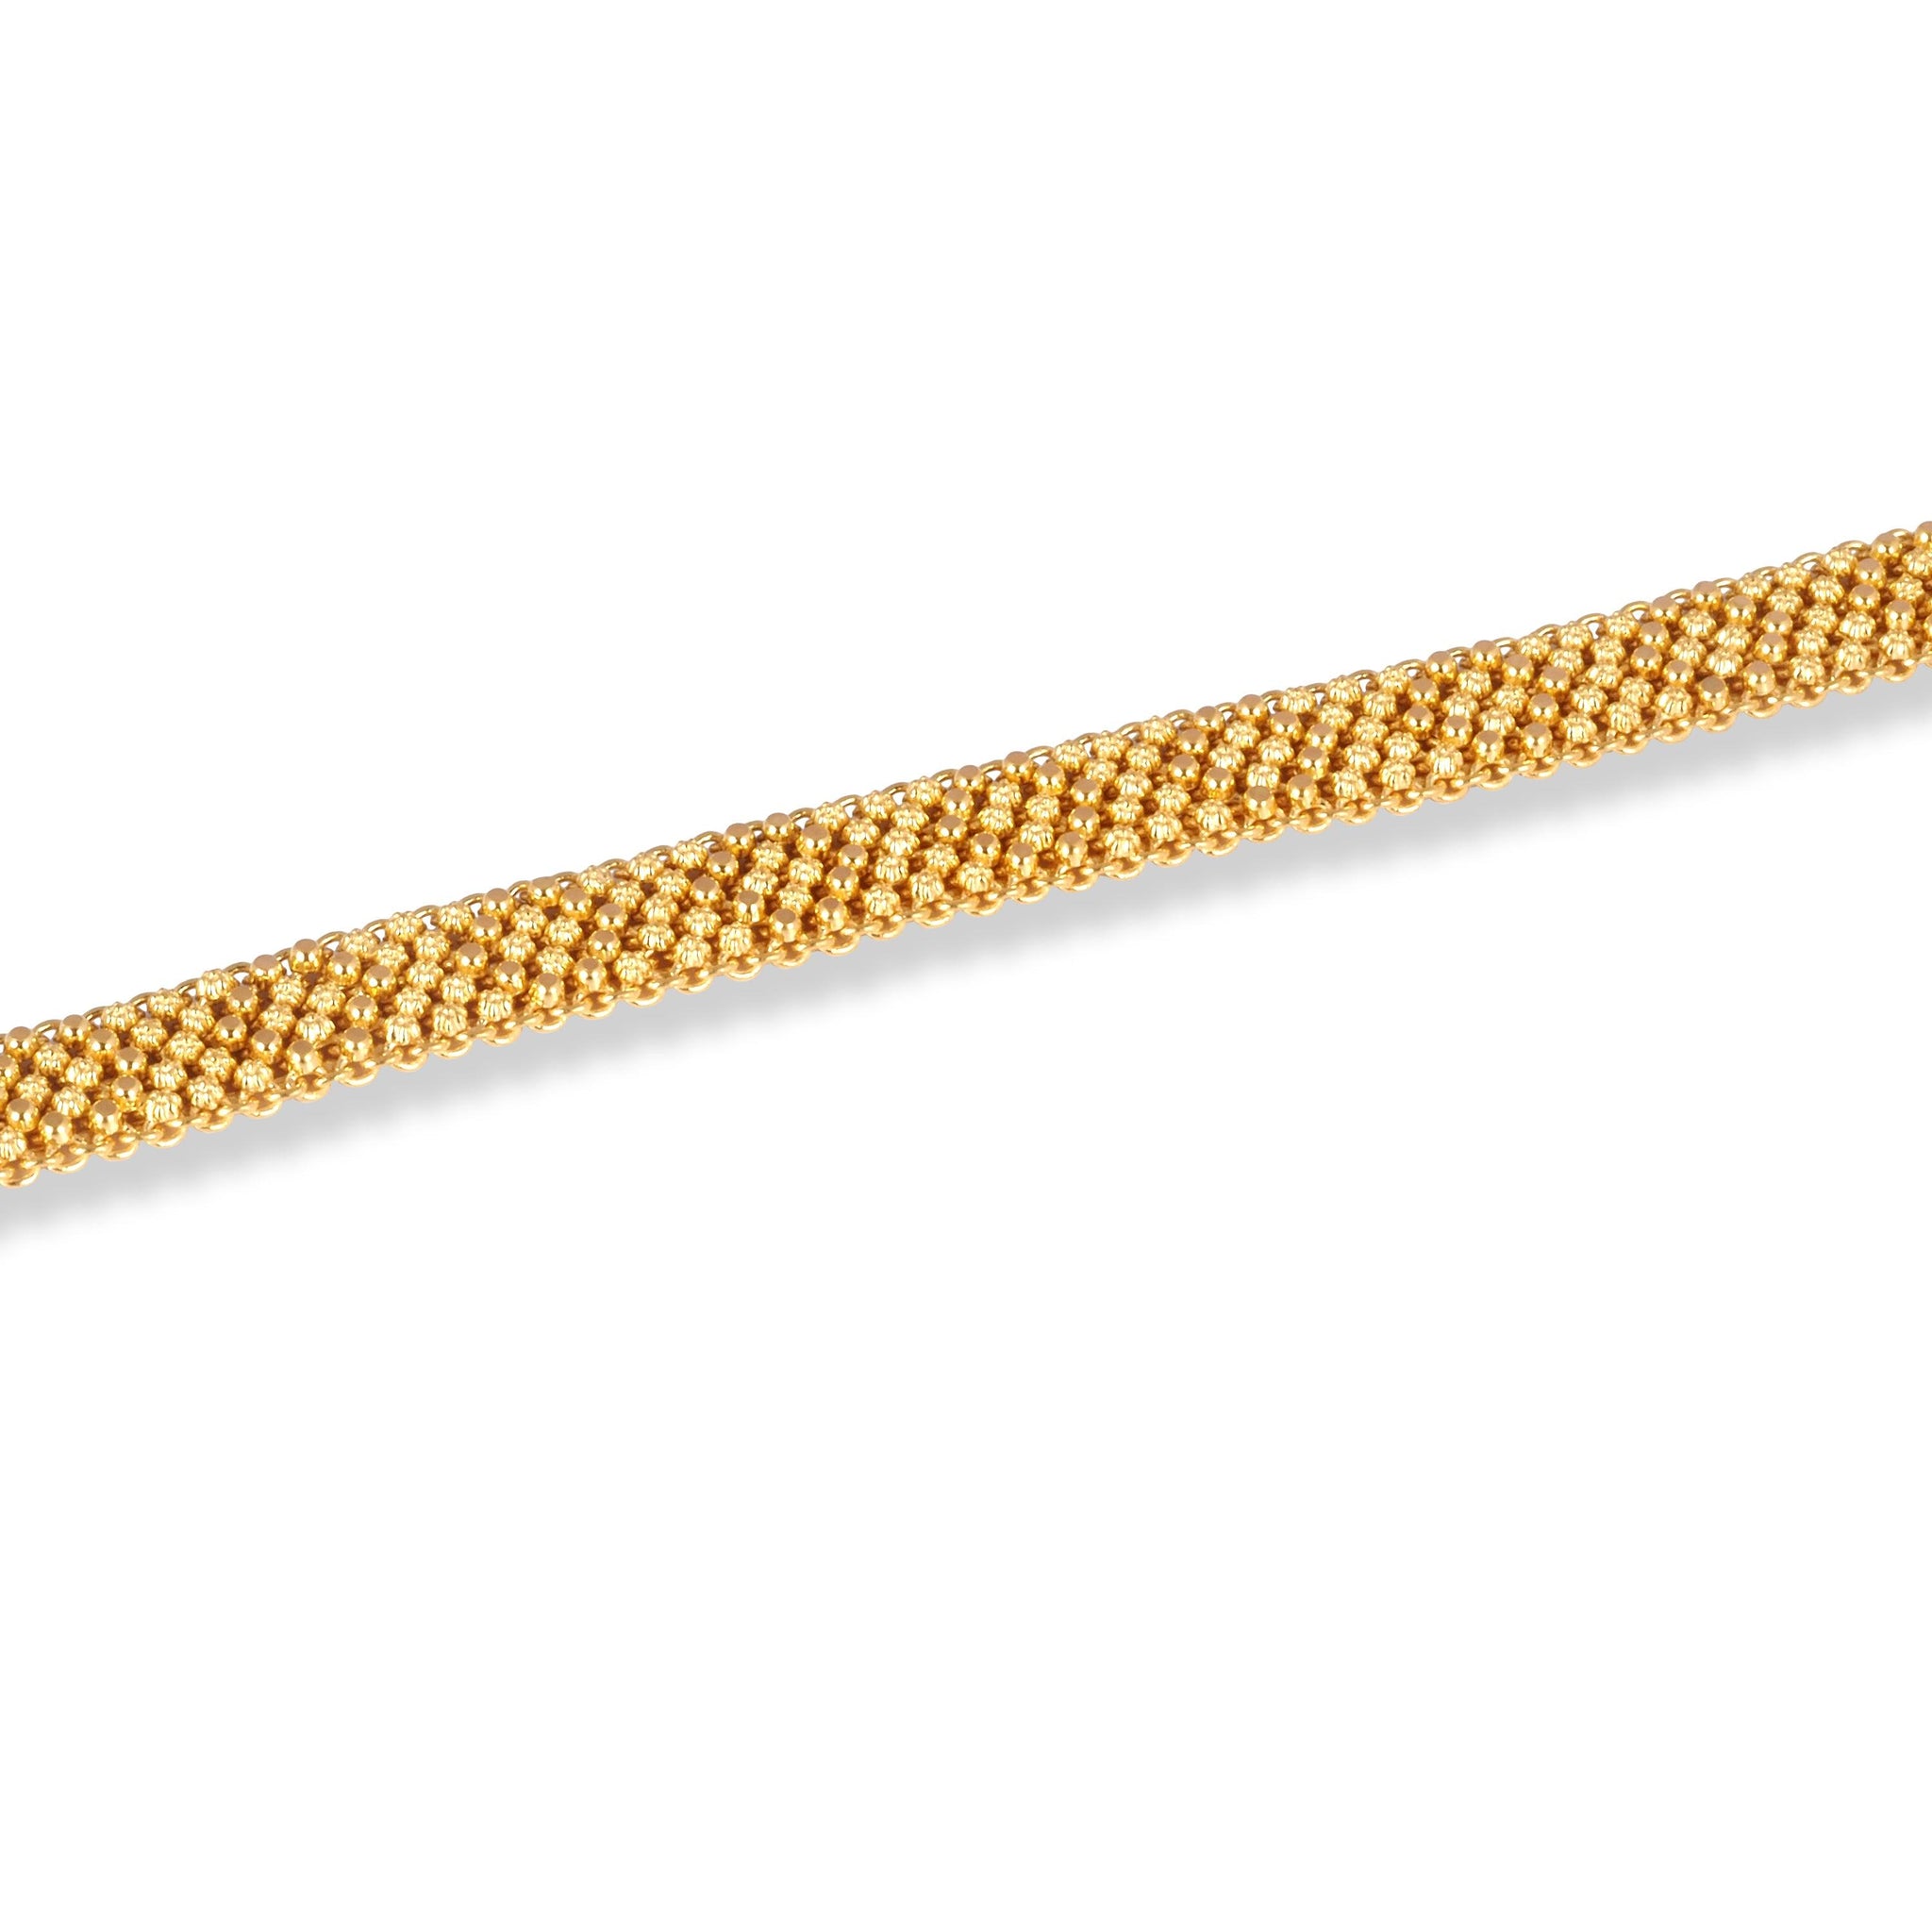 22ct Gold Ladies Bracelet in Filigree Work Design with U-Hook Clasp LBR-7148